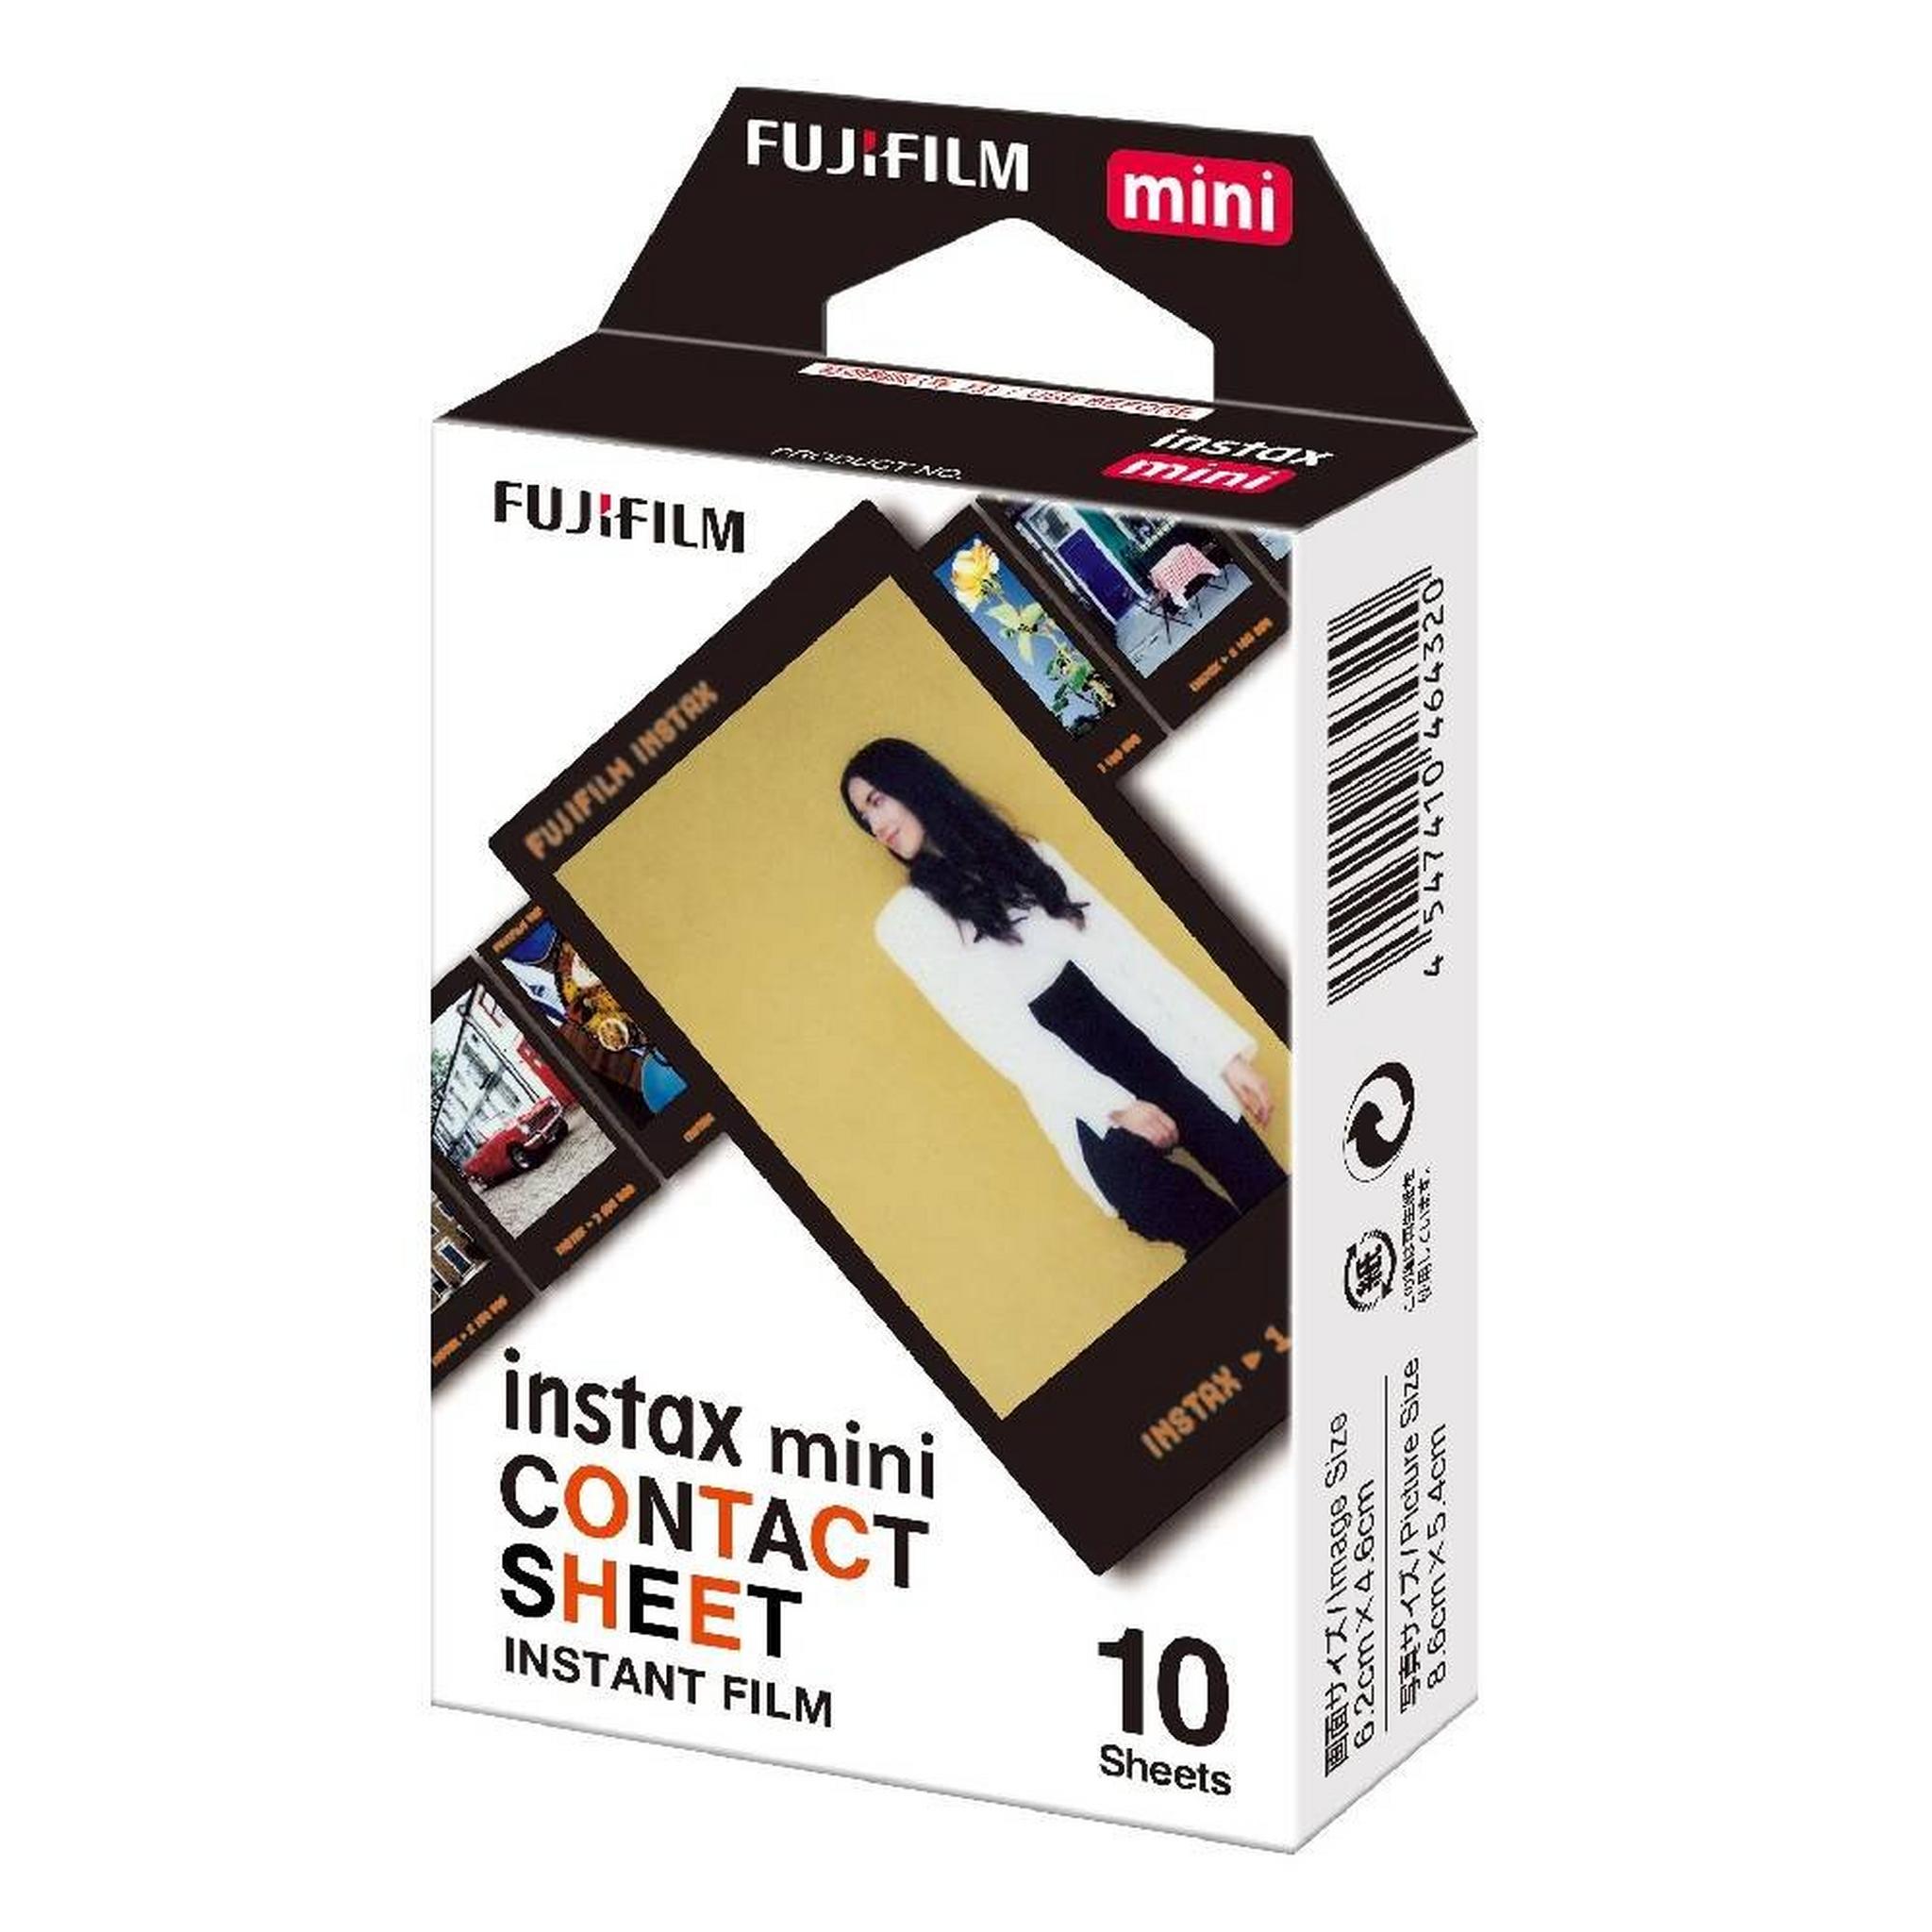 Fujifilm Instax Mini Contact Sheet Film, 10 Sheets,INSTX MINI - CS